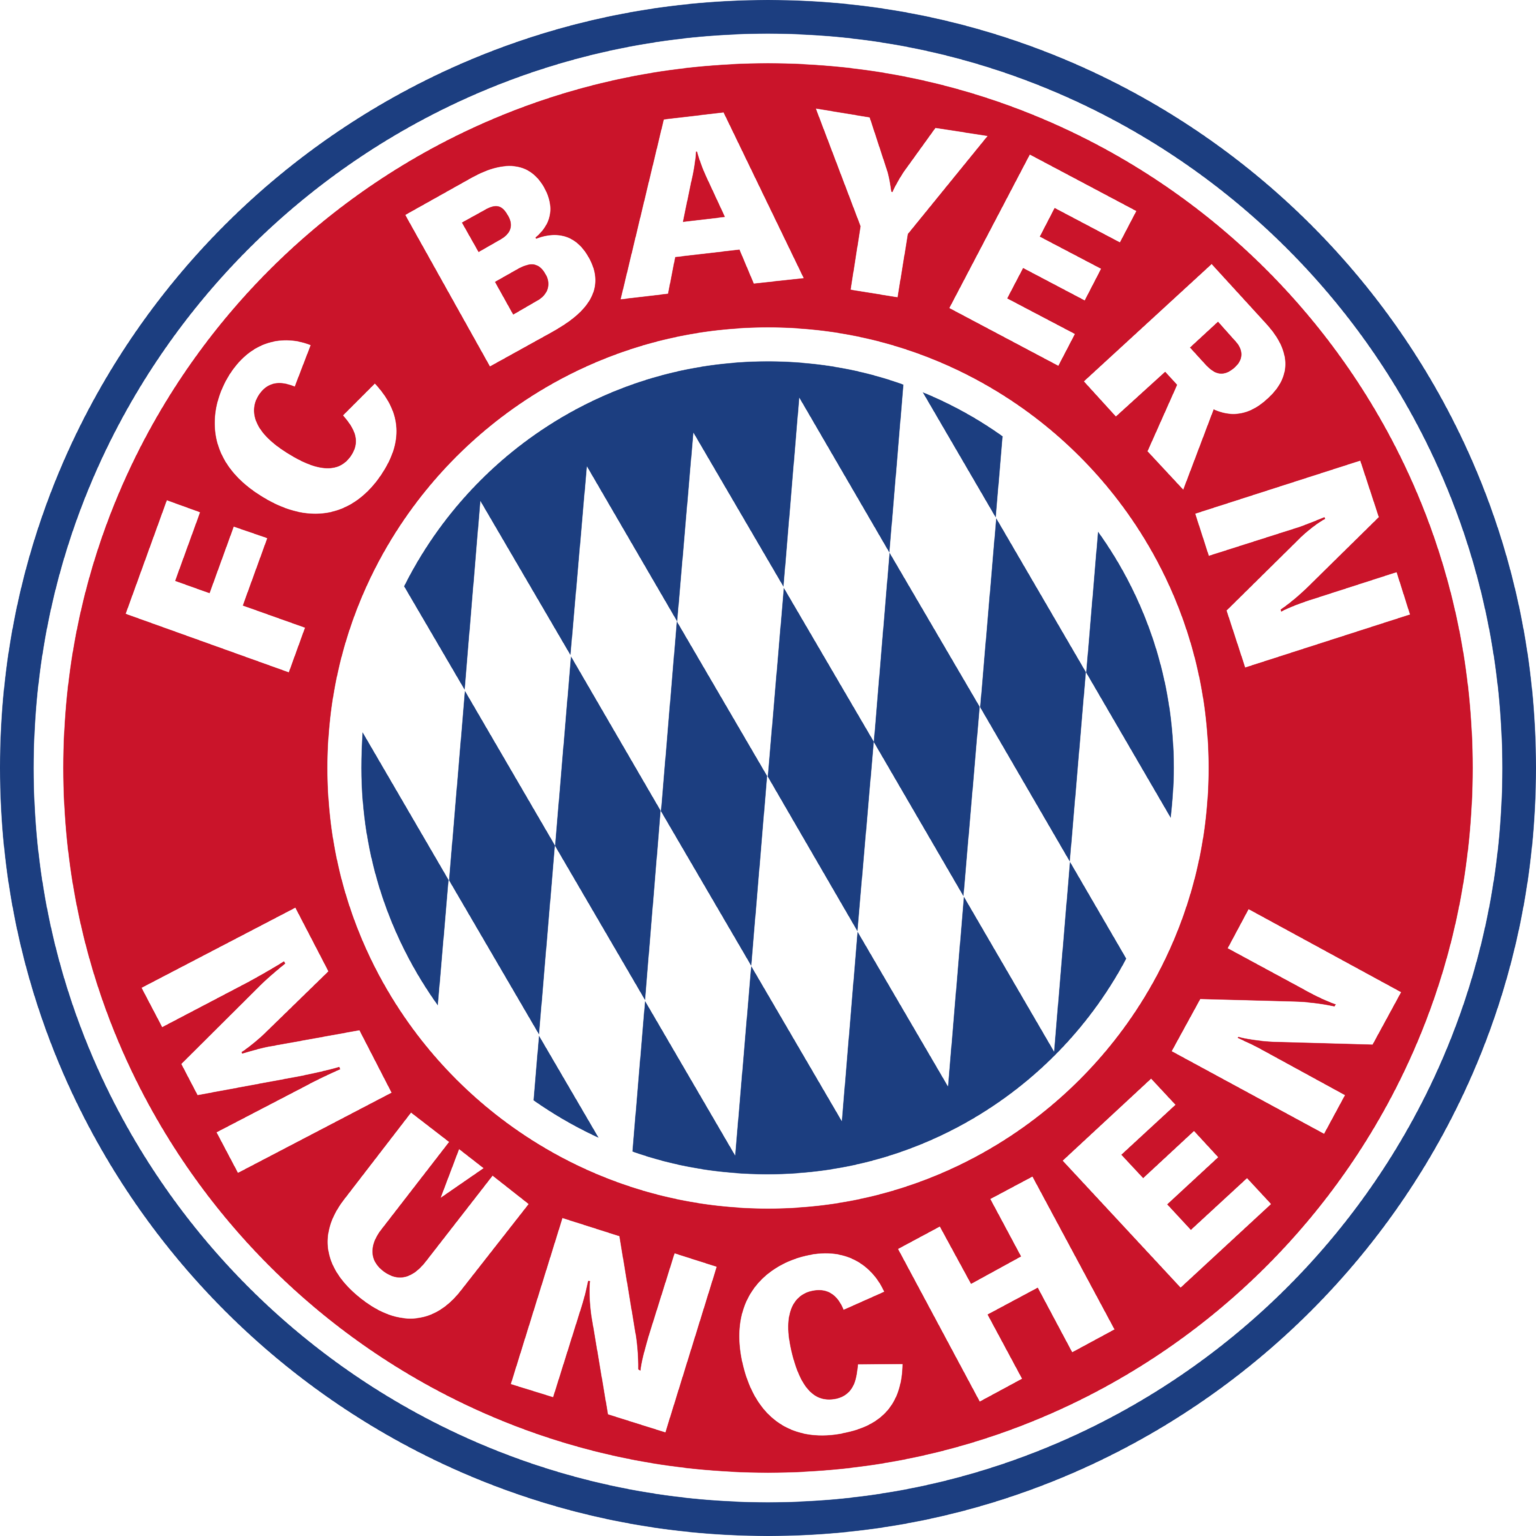 fc-bayern-munich-logos-download